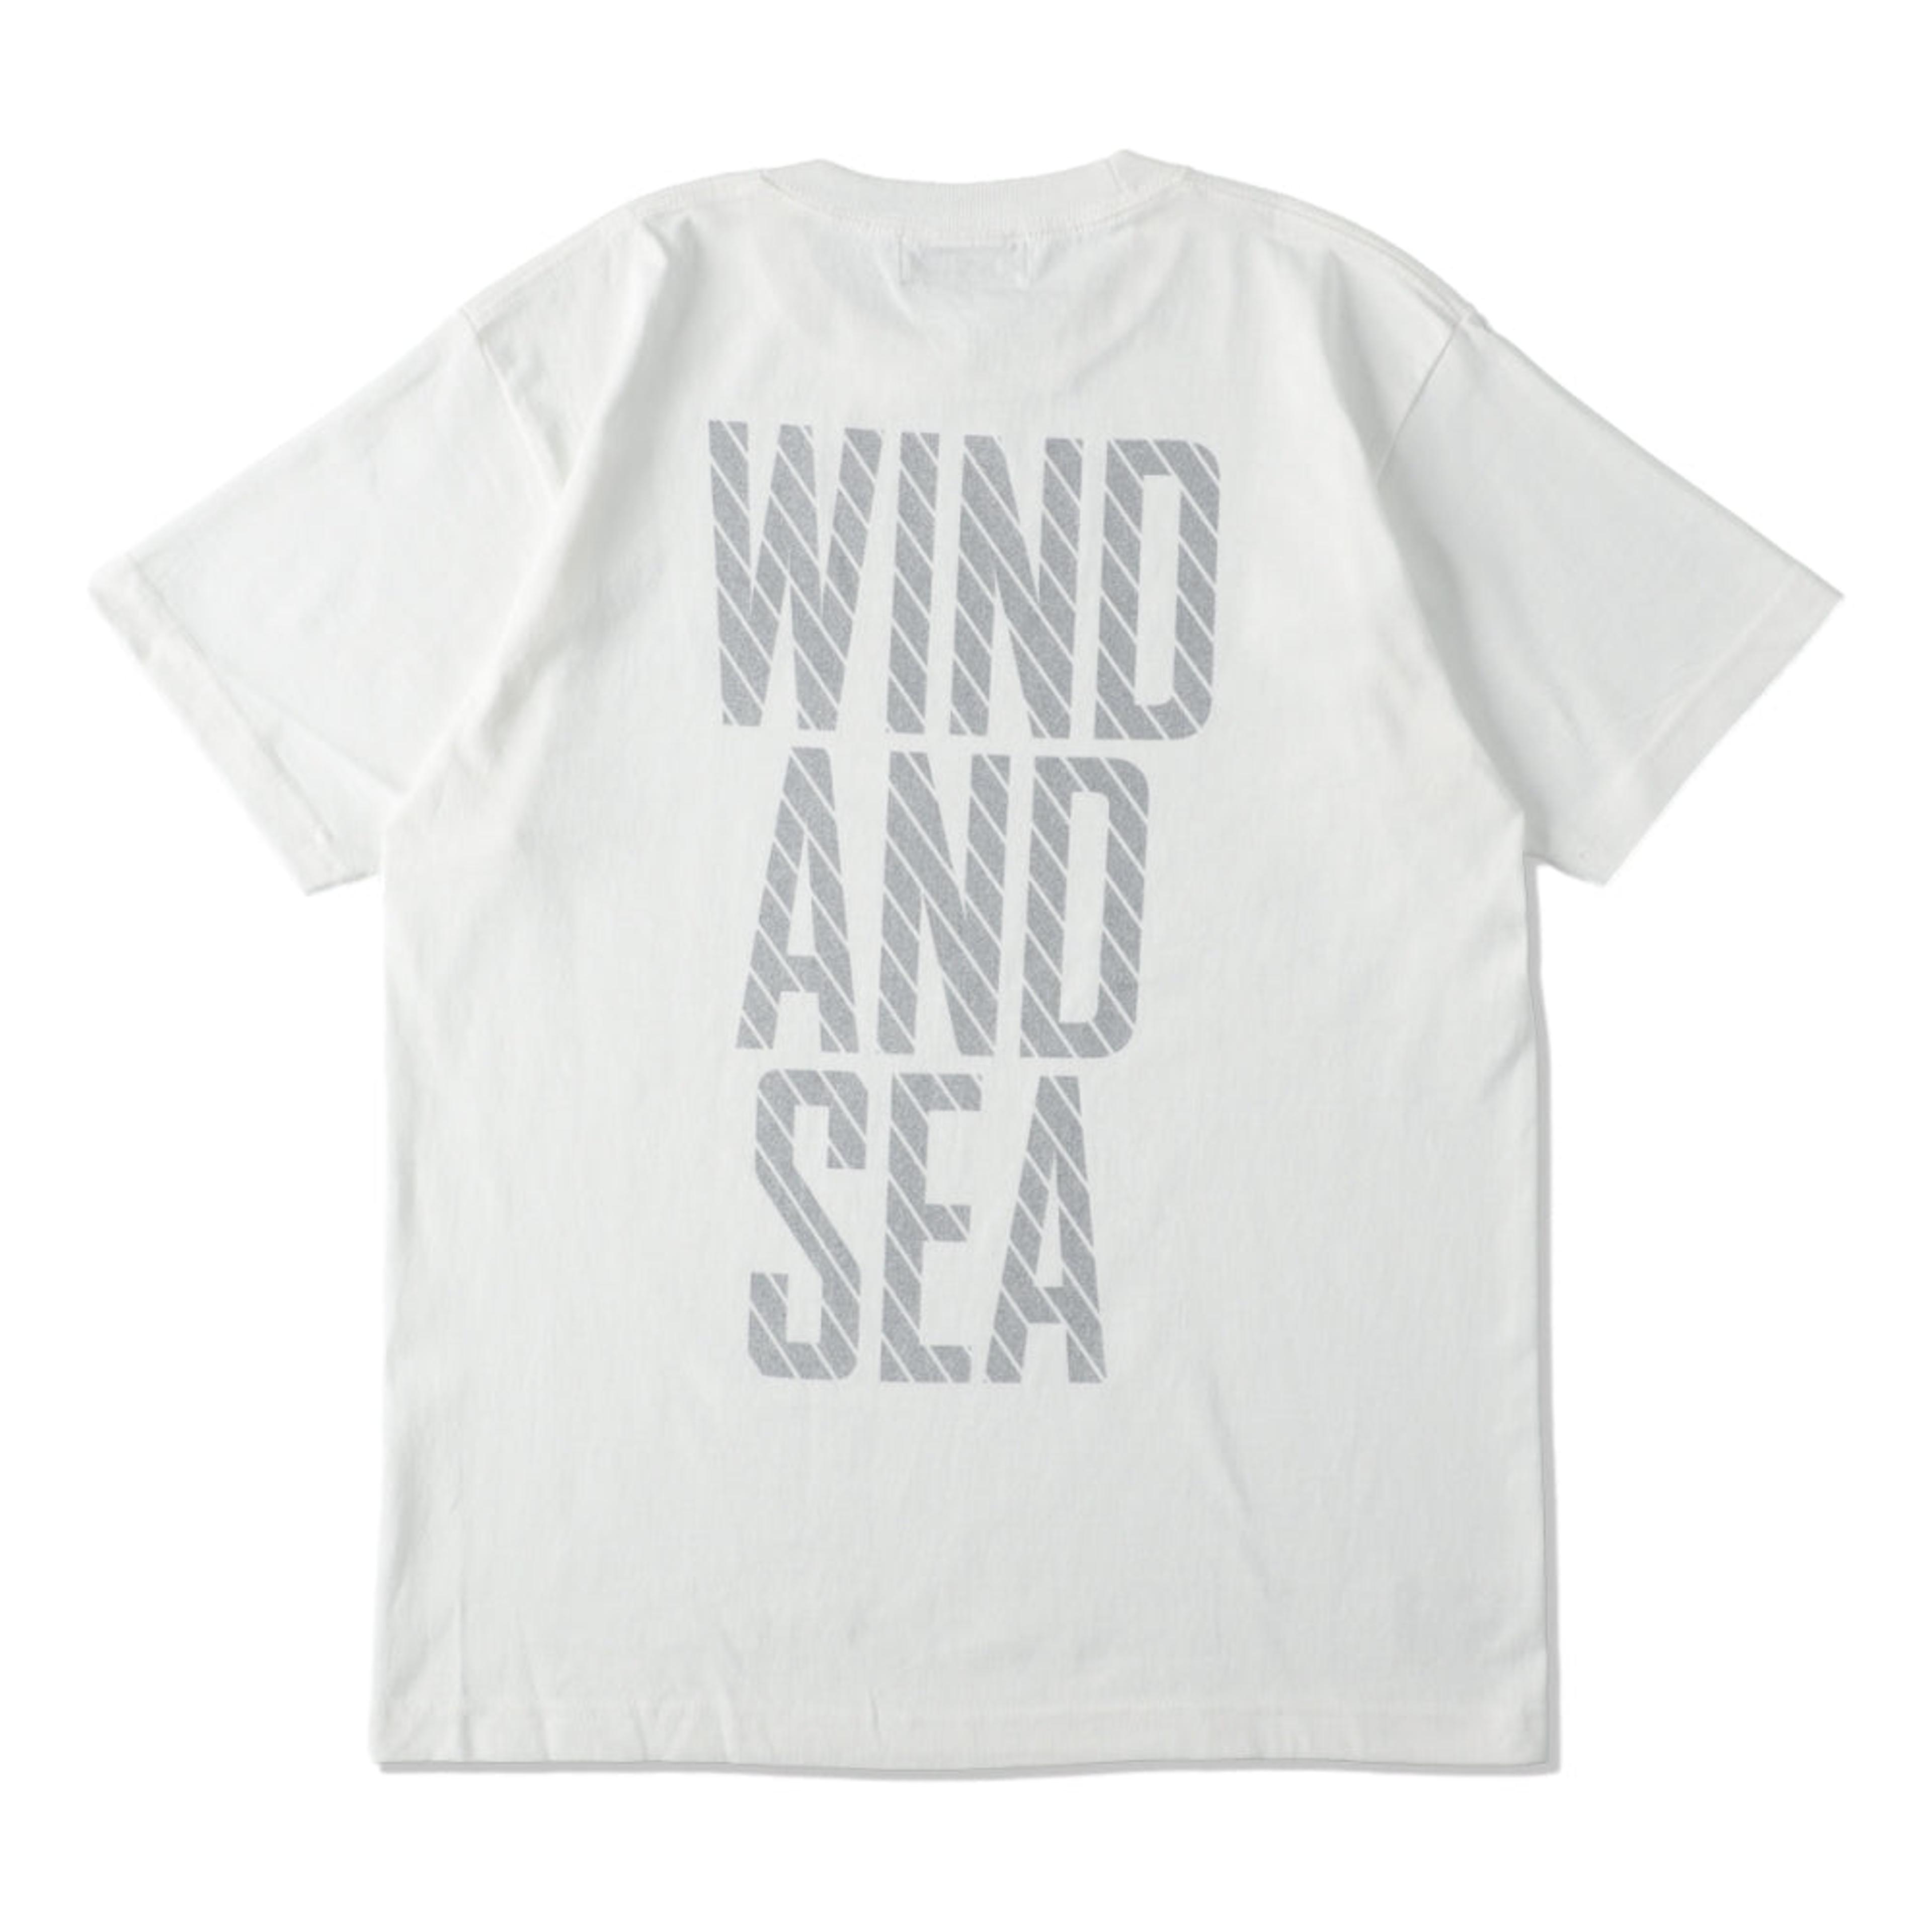 NTWRK - WIND AND SEA MILITARY SURPLUS S/S TEE-WHITE